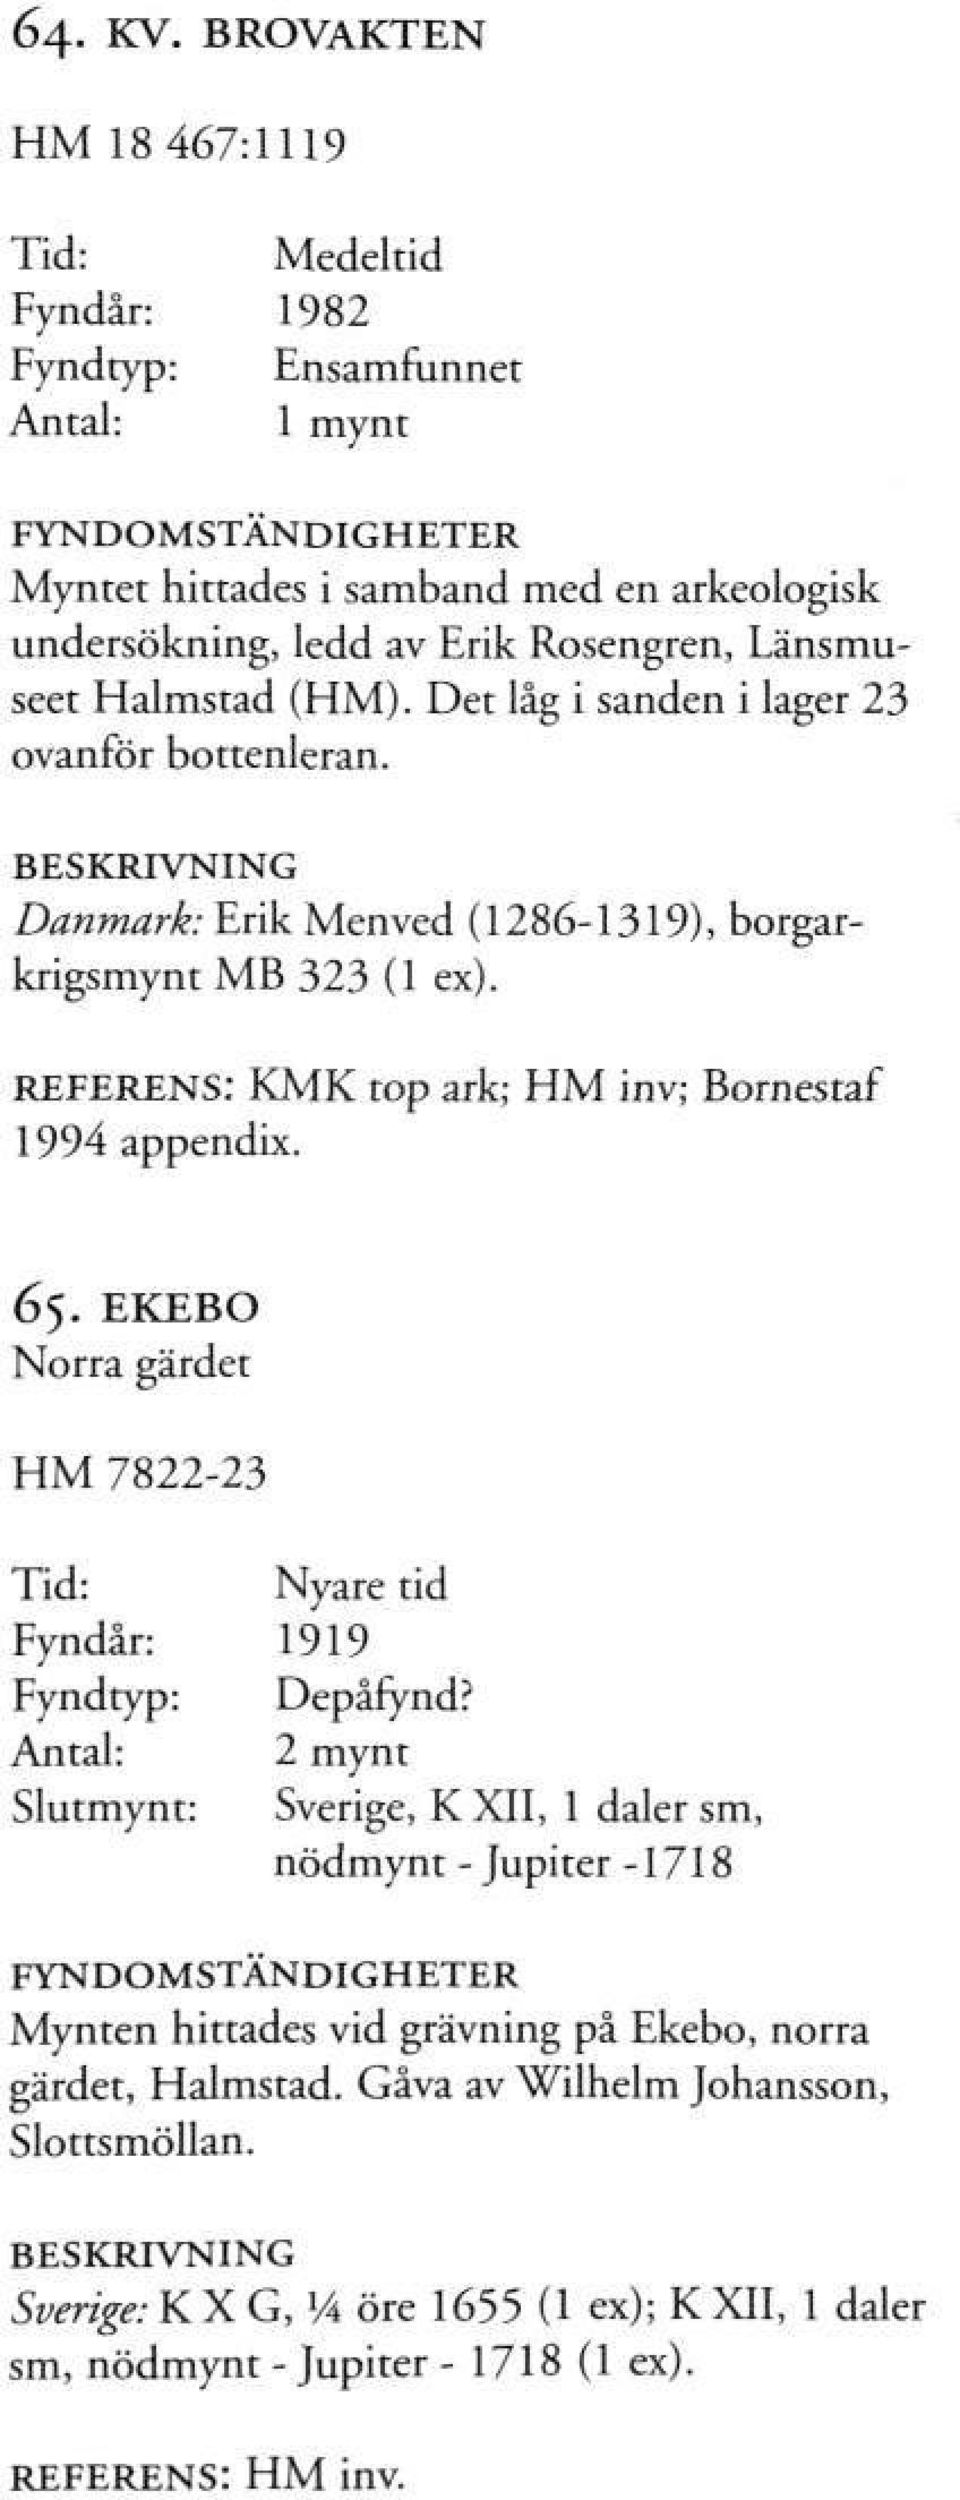 65. EKEBO Norra gärdet HM 7822-23 Fyndår: 1919 Fyndtyp: Depåfynd?